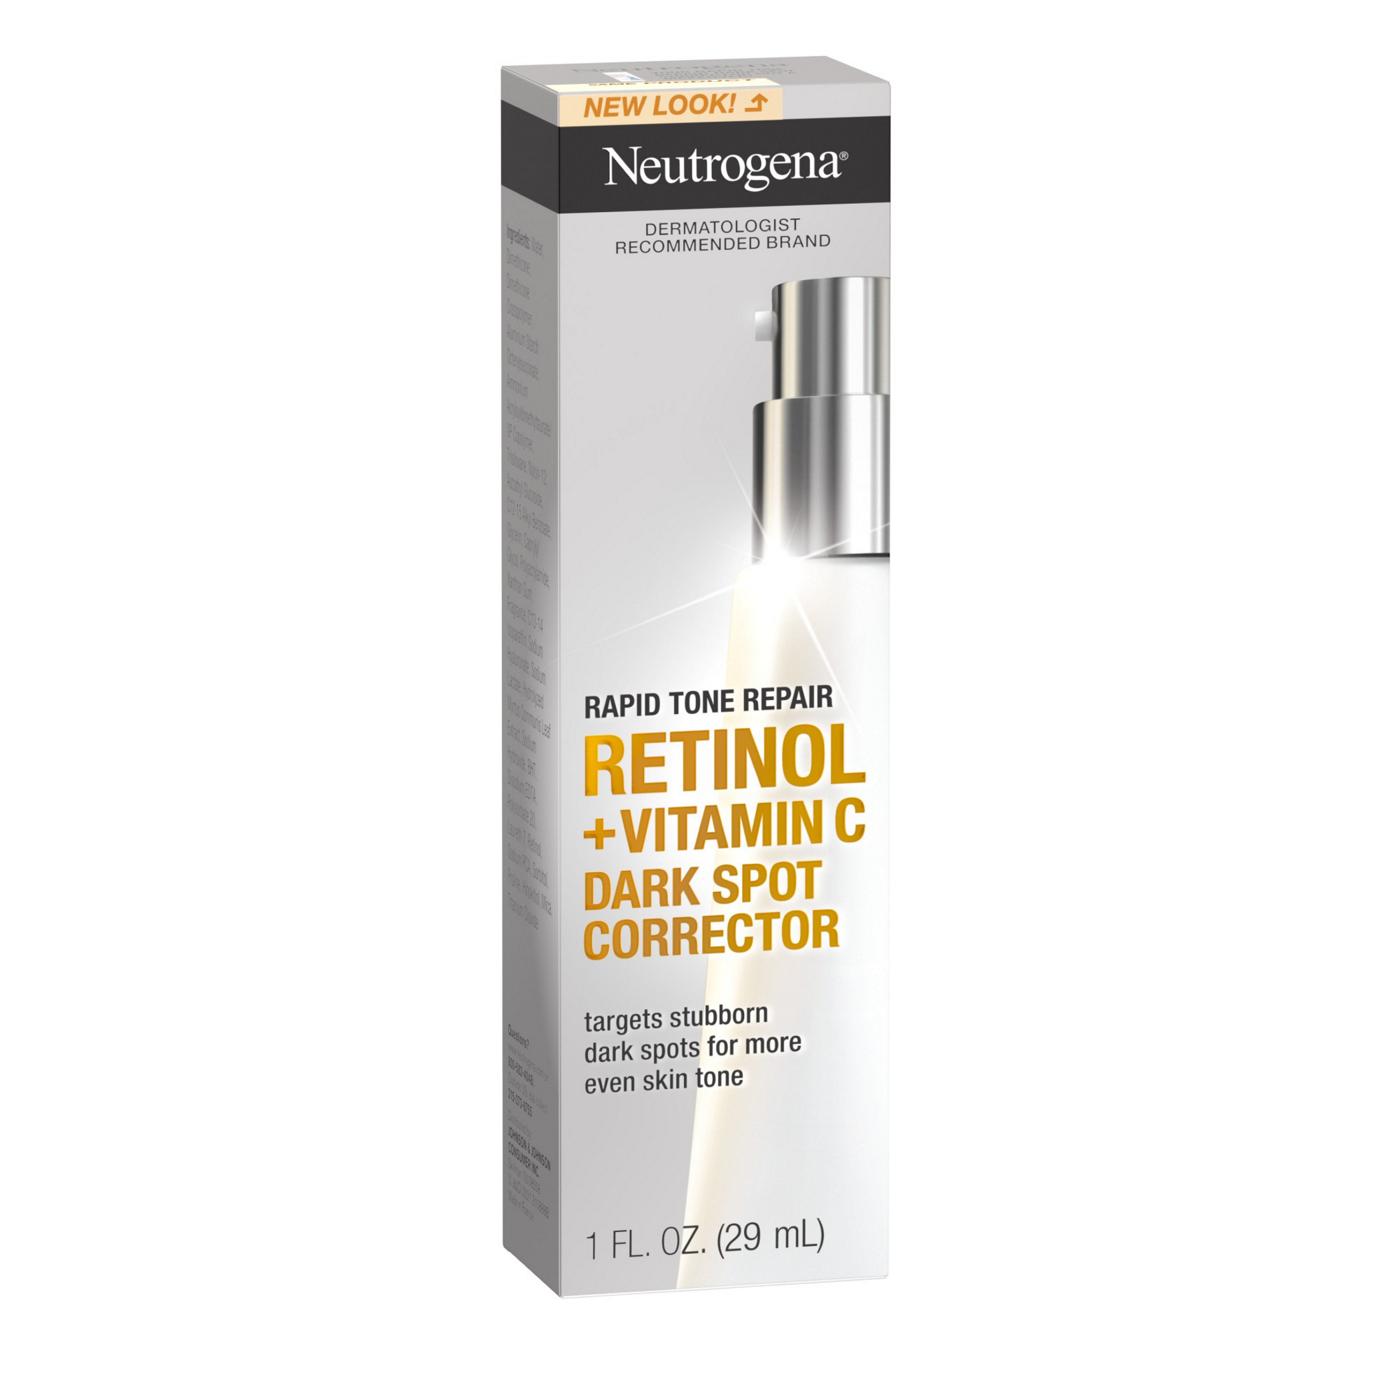 Neutrogena Rapid Tone Repair Retinol + Vitamin C Dark Spot Corrector; image 1 of 8